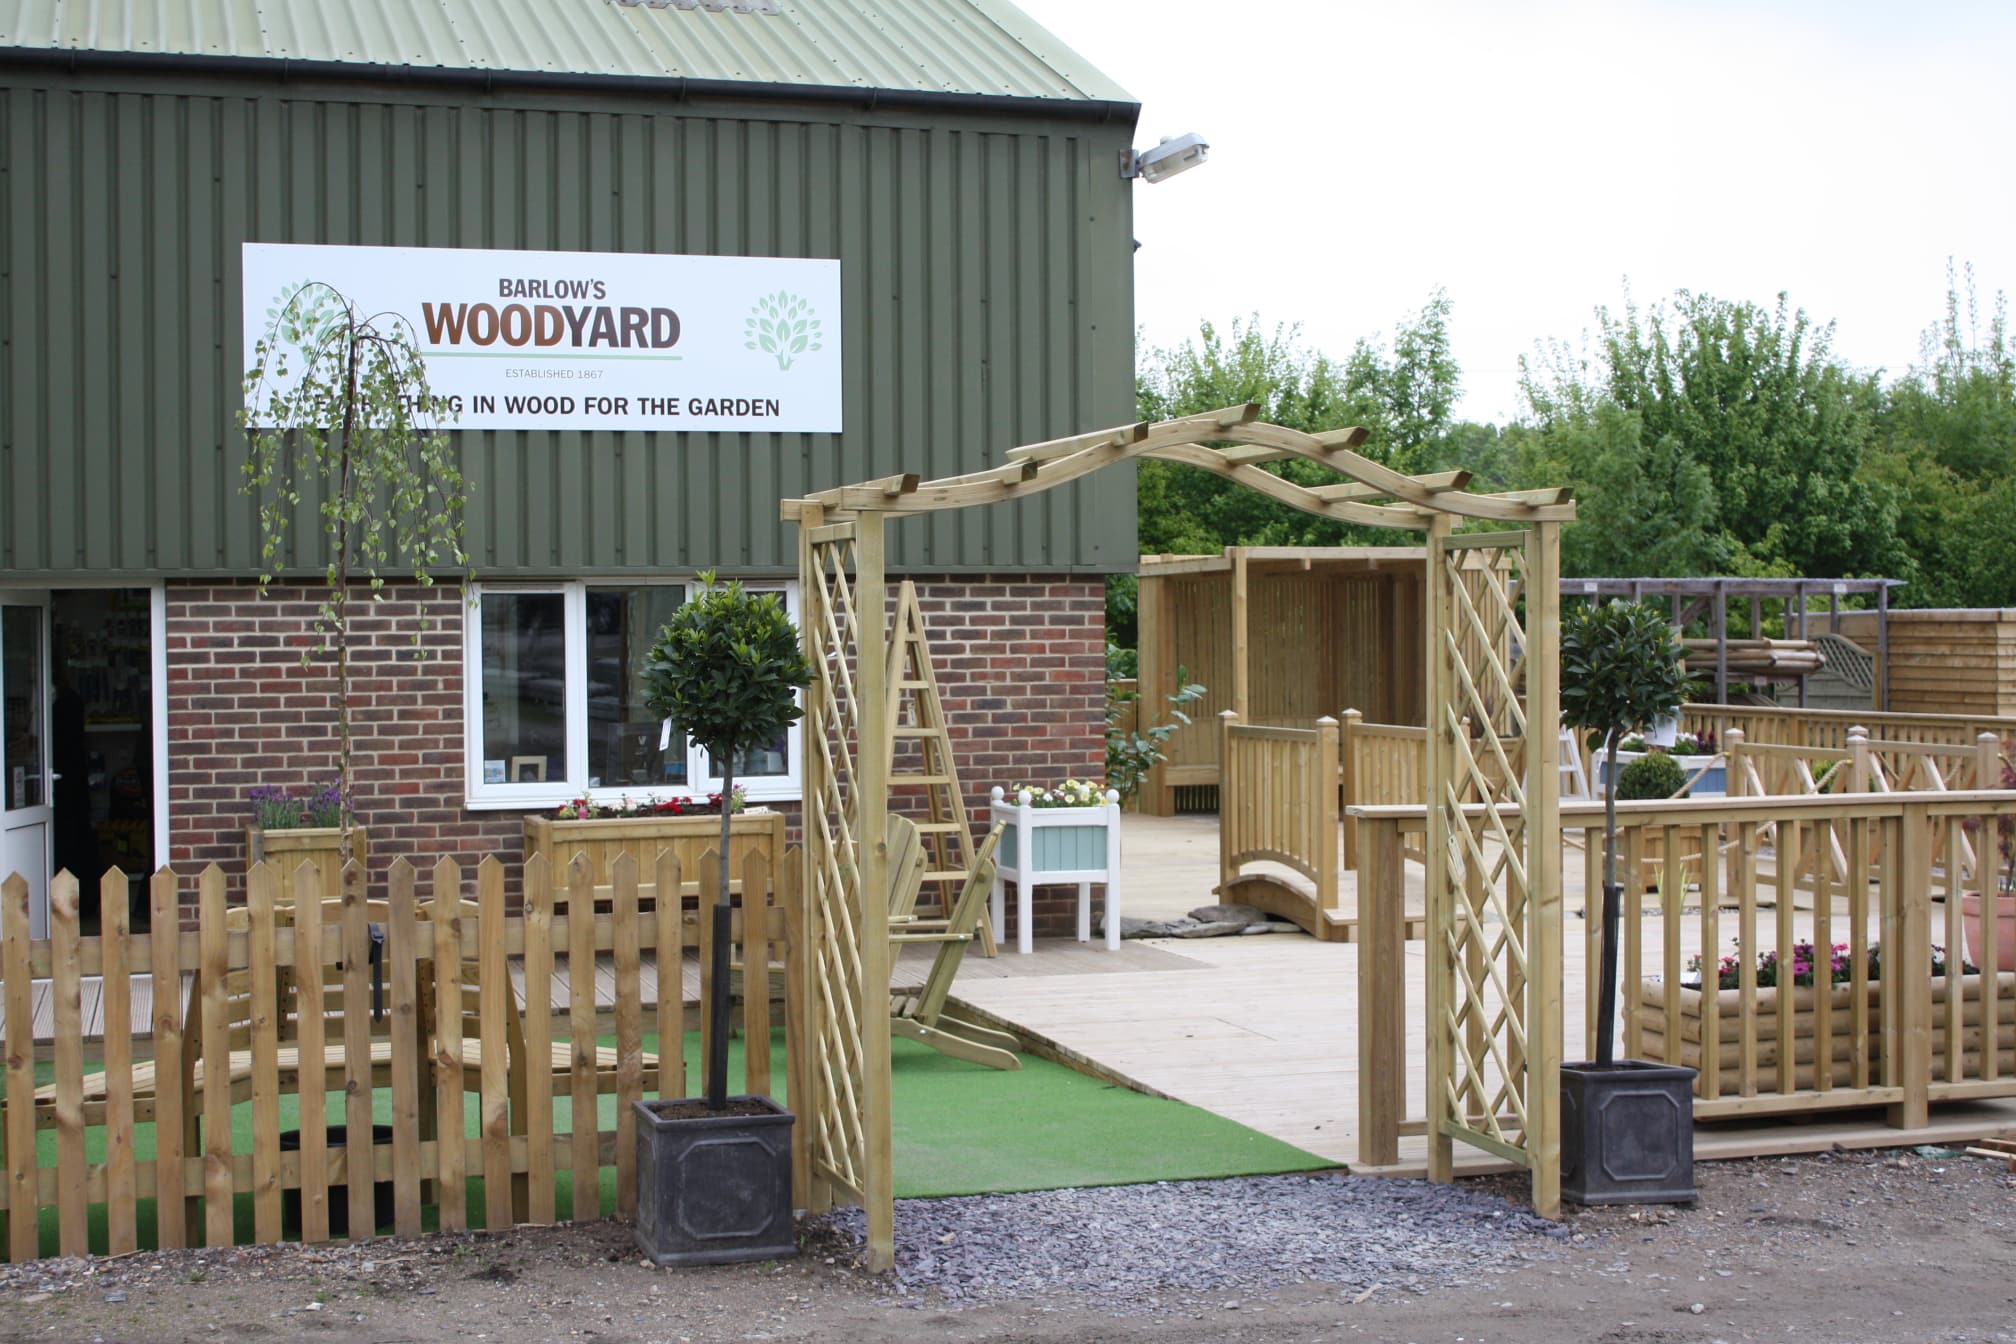 Images Barlow's Wood Yard